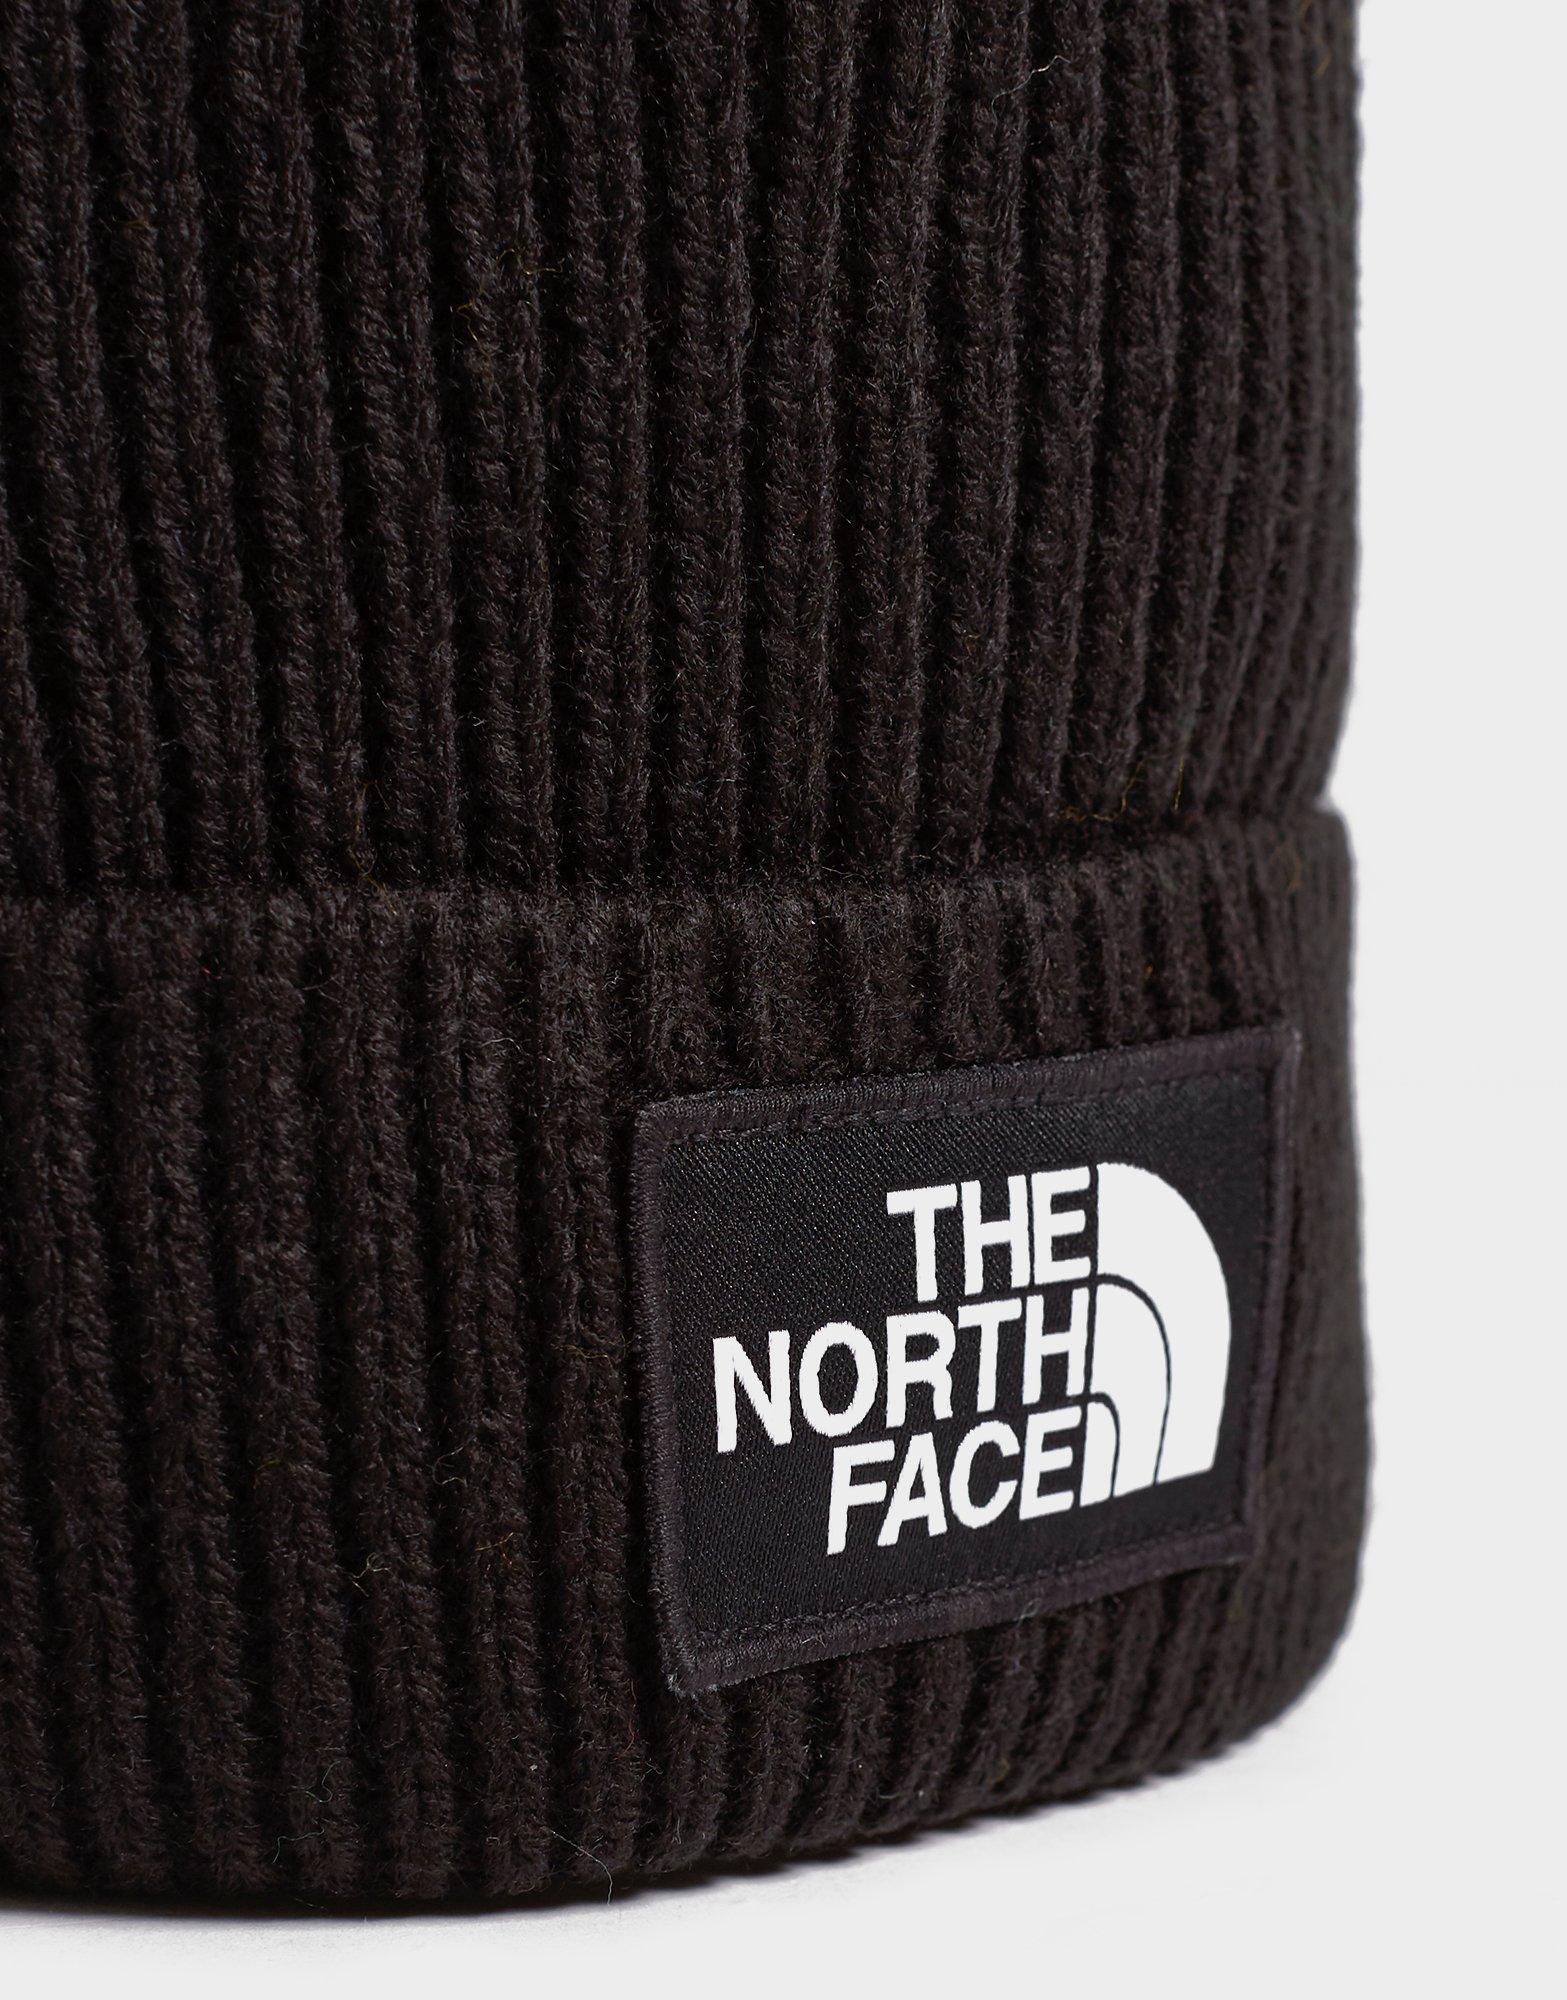 The North Face Logo Beanie Noir- JD Sports France